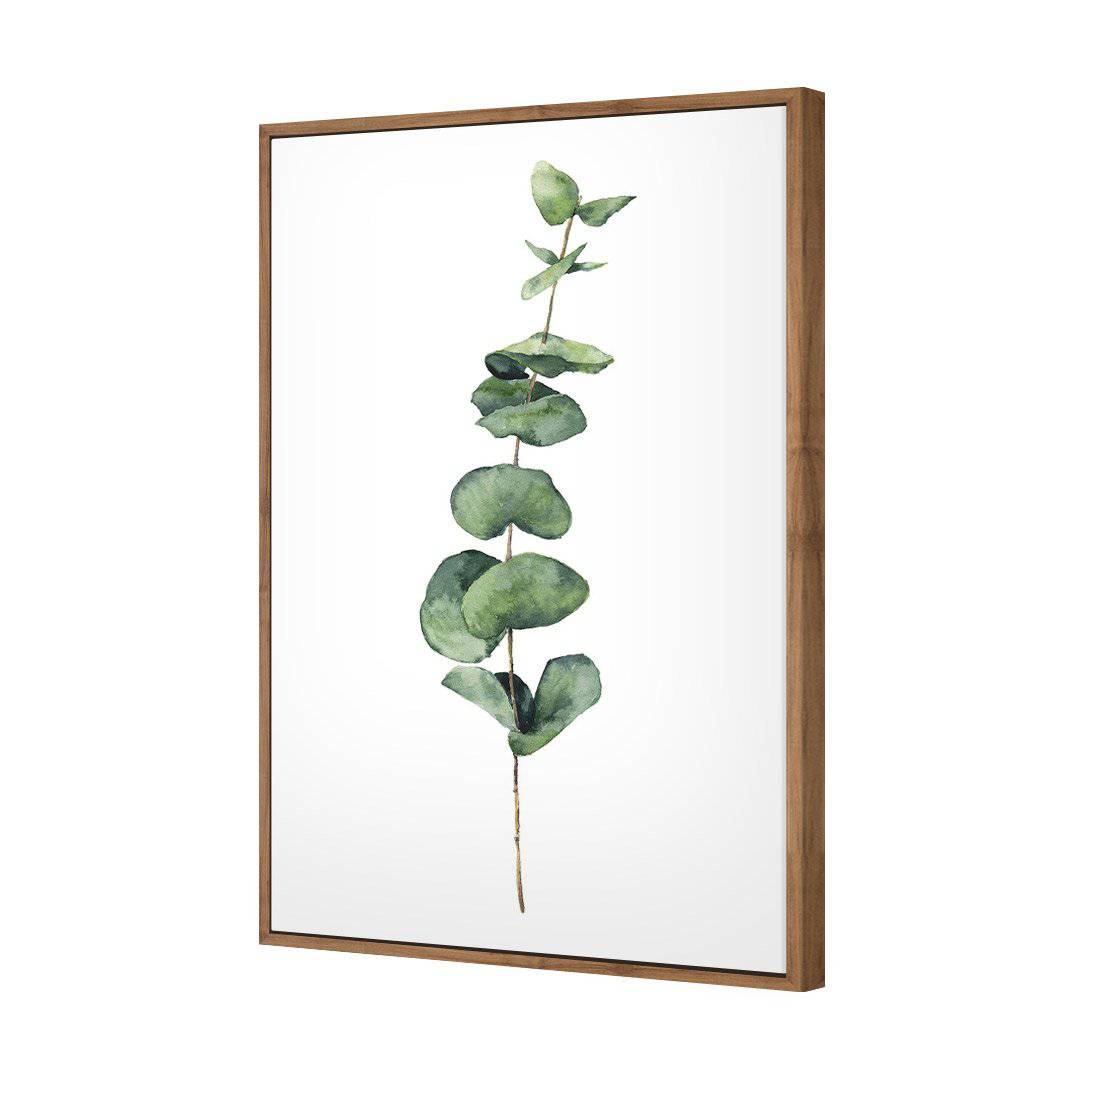 Fragrant Herb 2 Canvas Art-Canvas-Wall Art Designs-45x30cm-Canvas - Natural Frame-Wall Art Designs